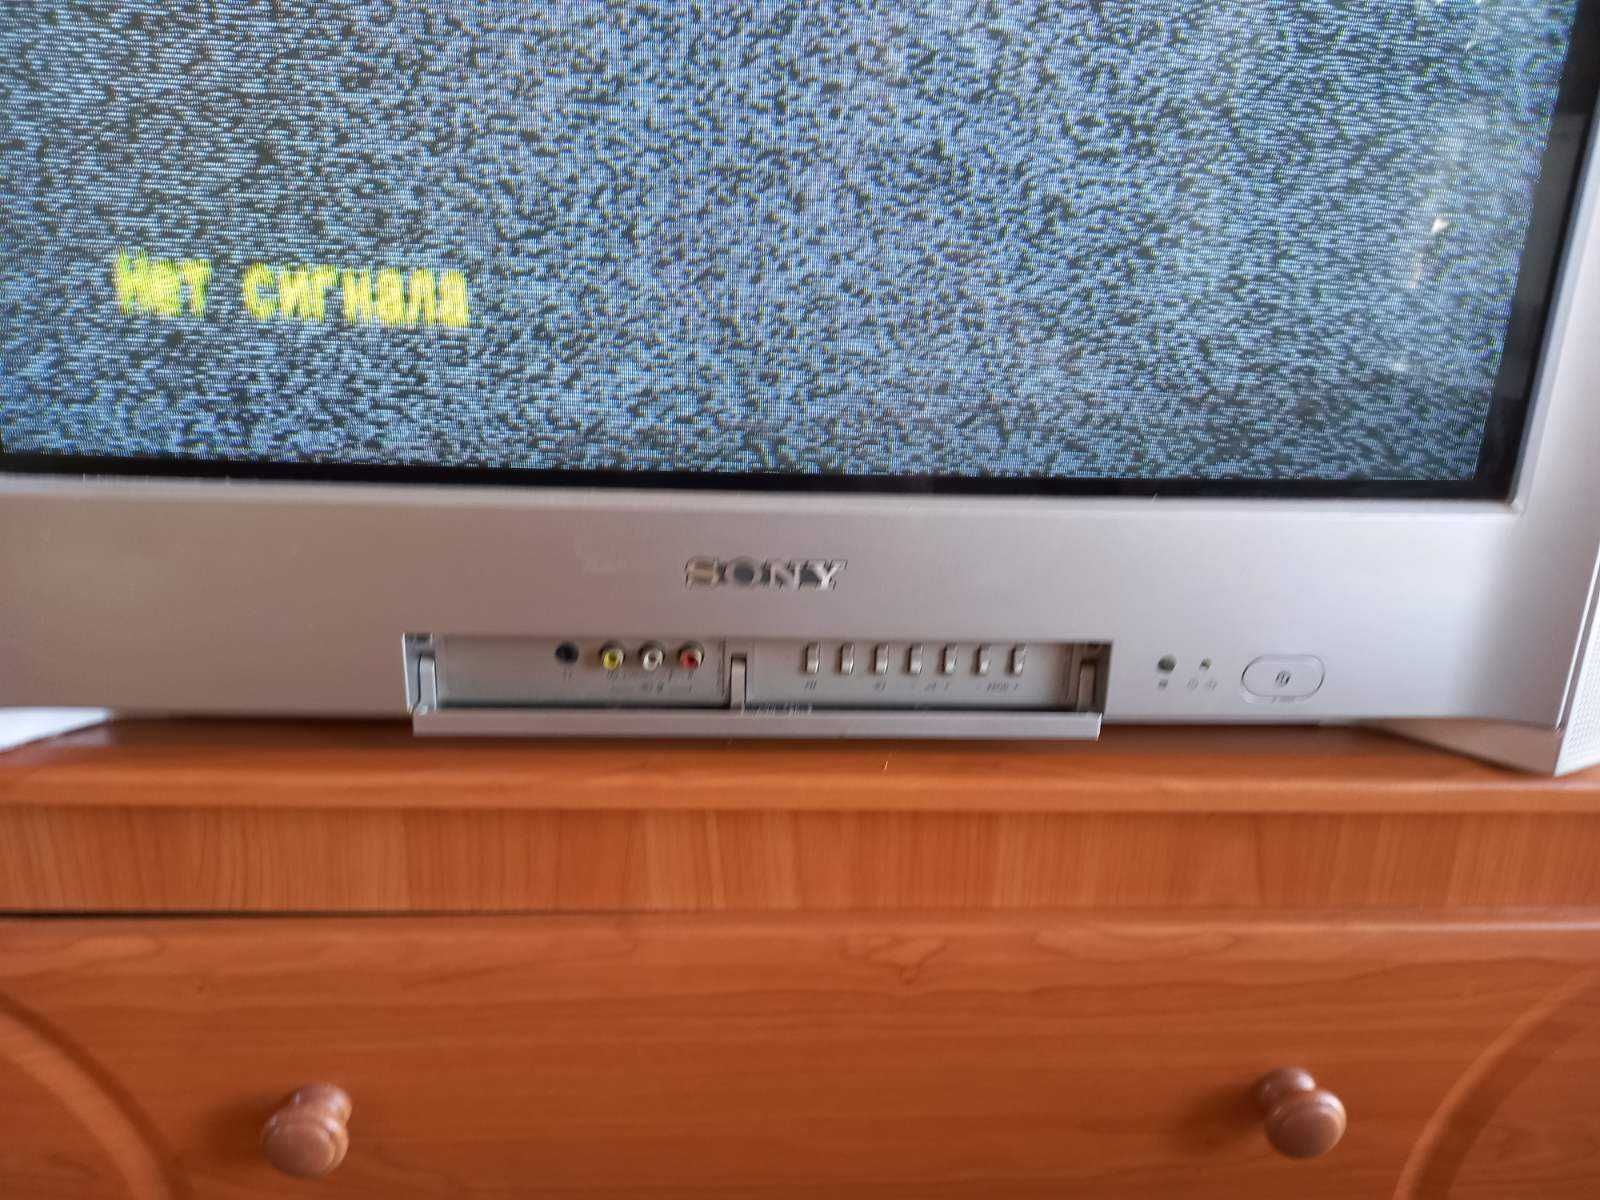 Телевизор SONY KV-SW292M91